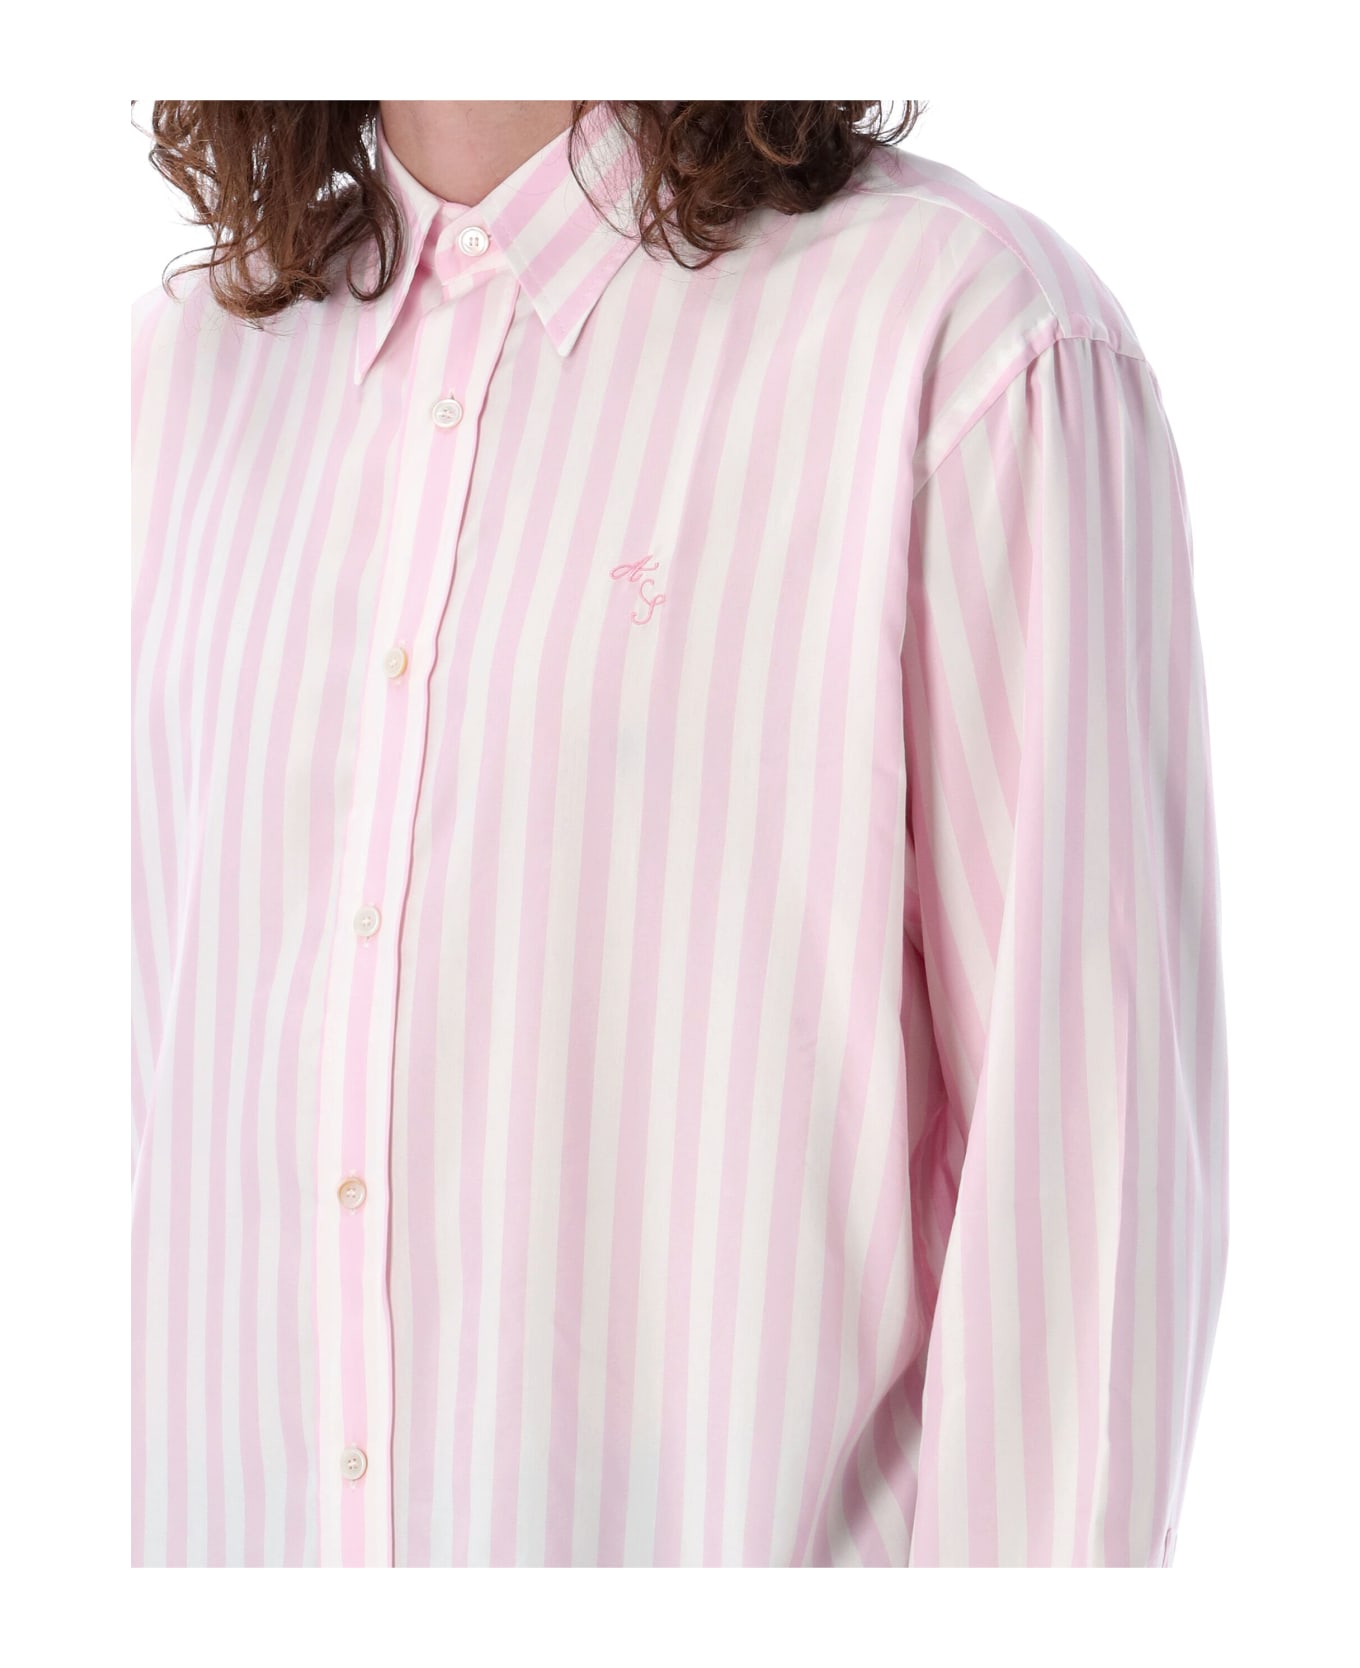 Acne Studios Stripe Button-up Shirt - PINK WHITE STRIPES